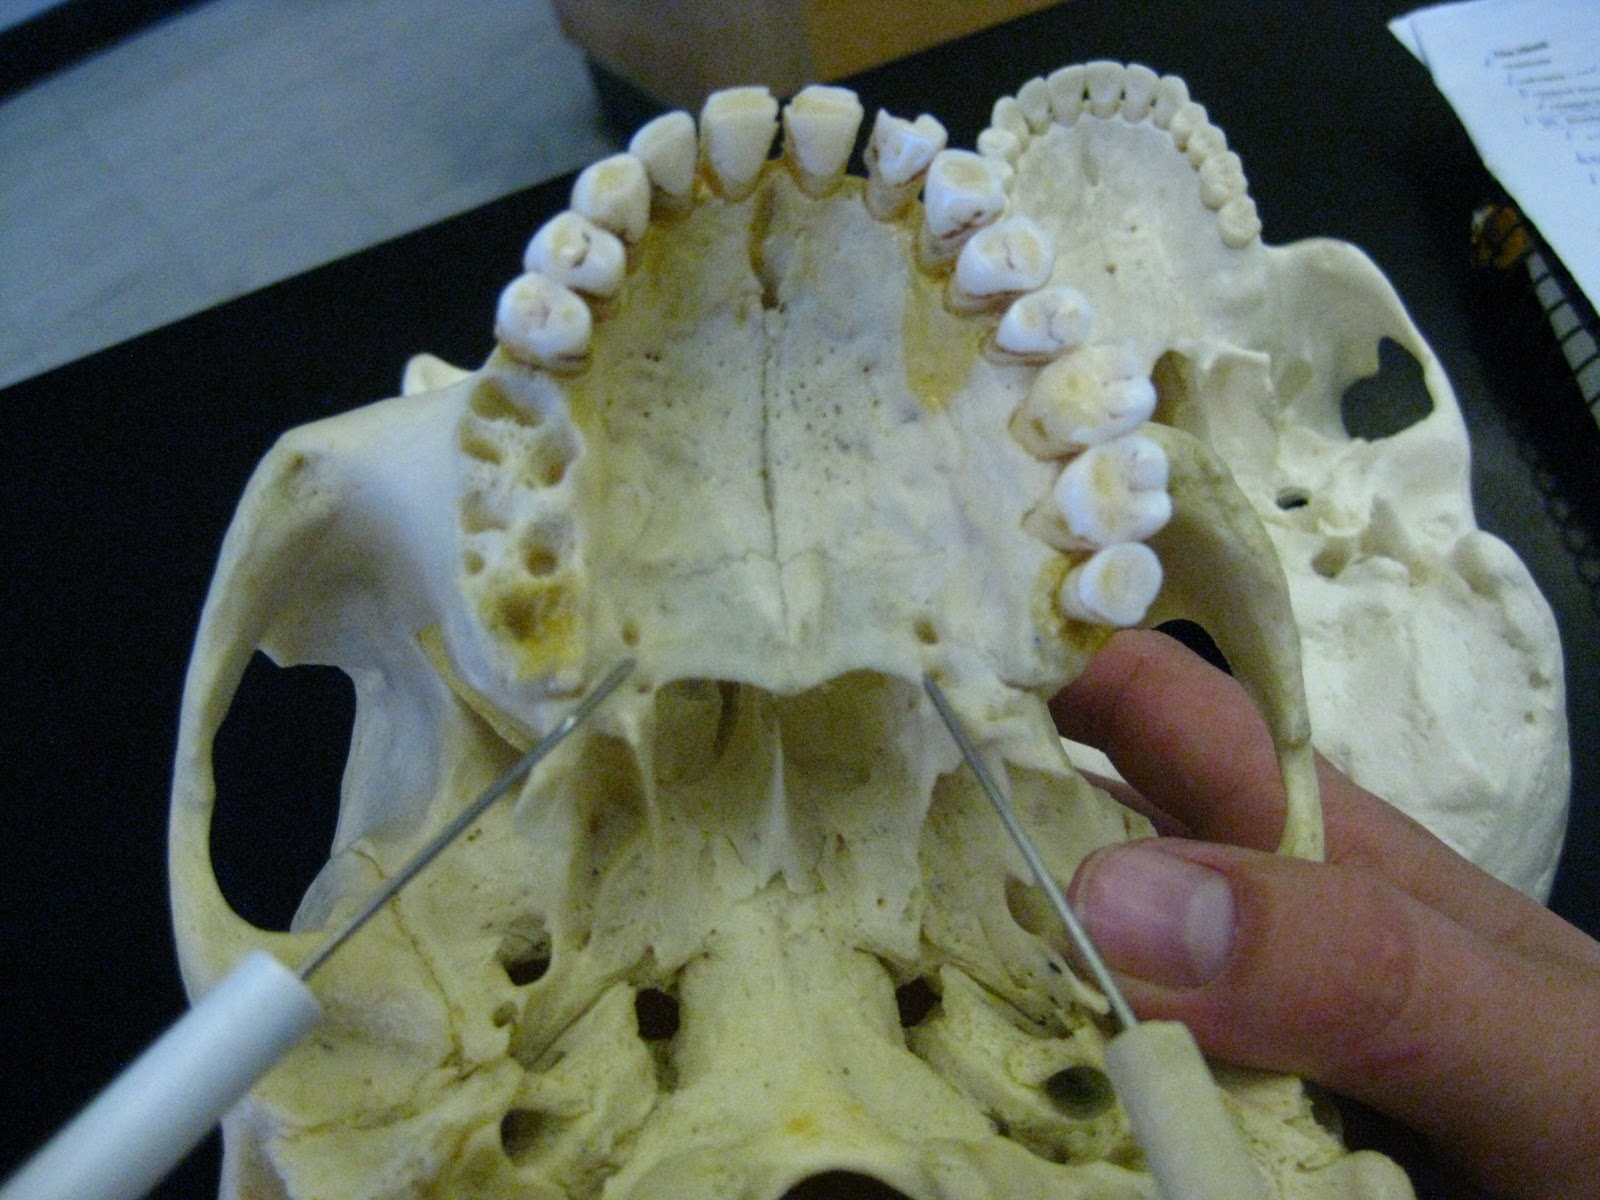 Boned Human Skull palatine foramina (of palatine bone)